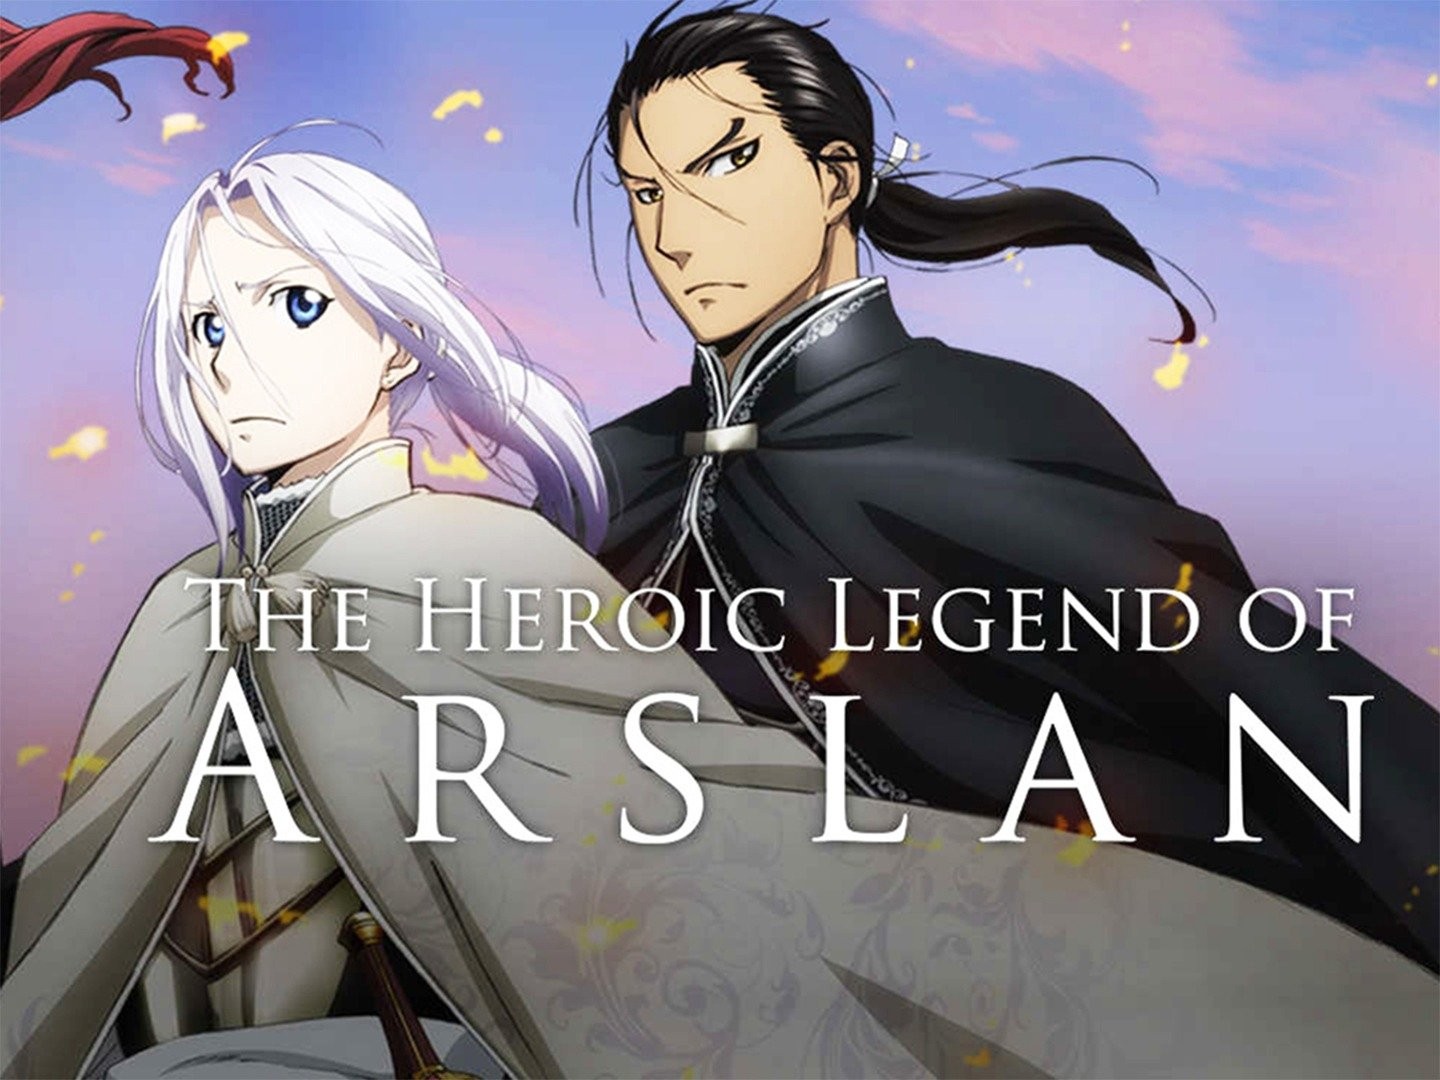 Category:Anime | The Heroic Legend of Arslan Wiki | Fandom